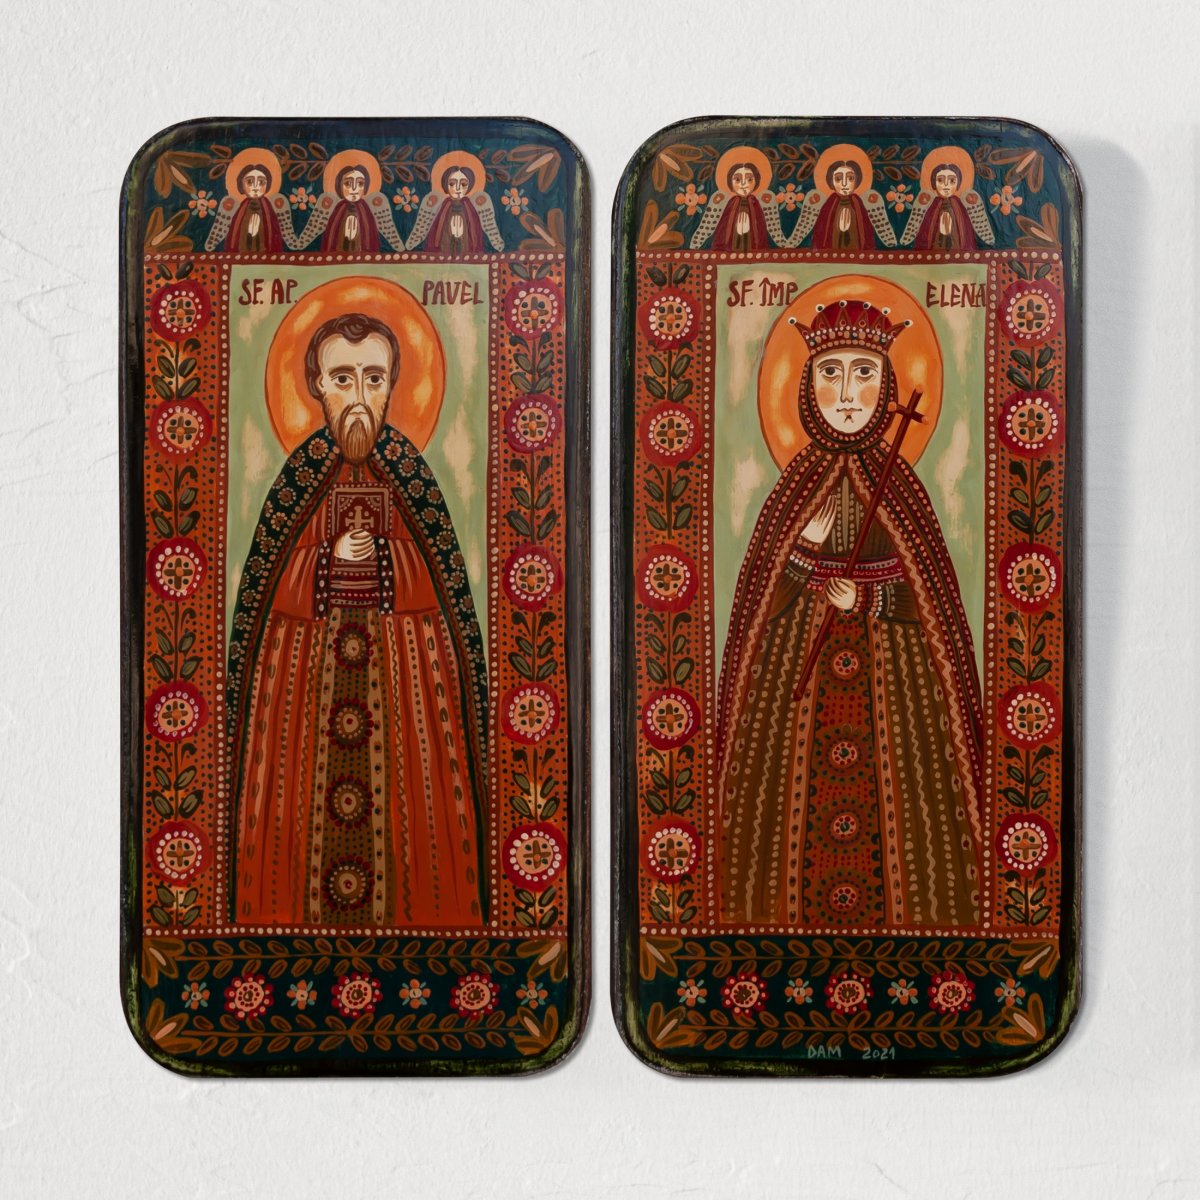 Icoană pe lemn tip diptic "Sf. Ap. Pavel și Sf. Împ. Elena", 2 x 10x20cm